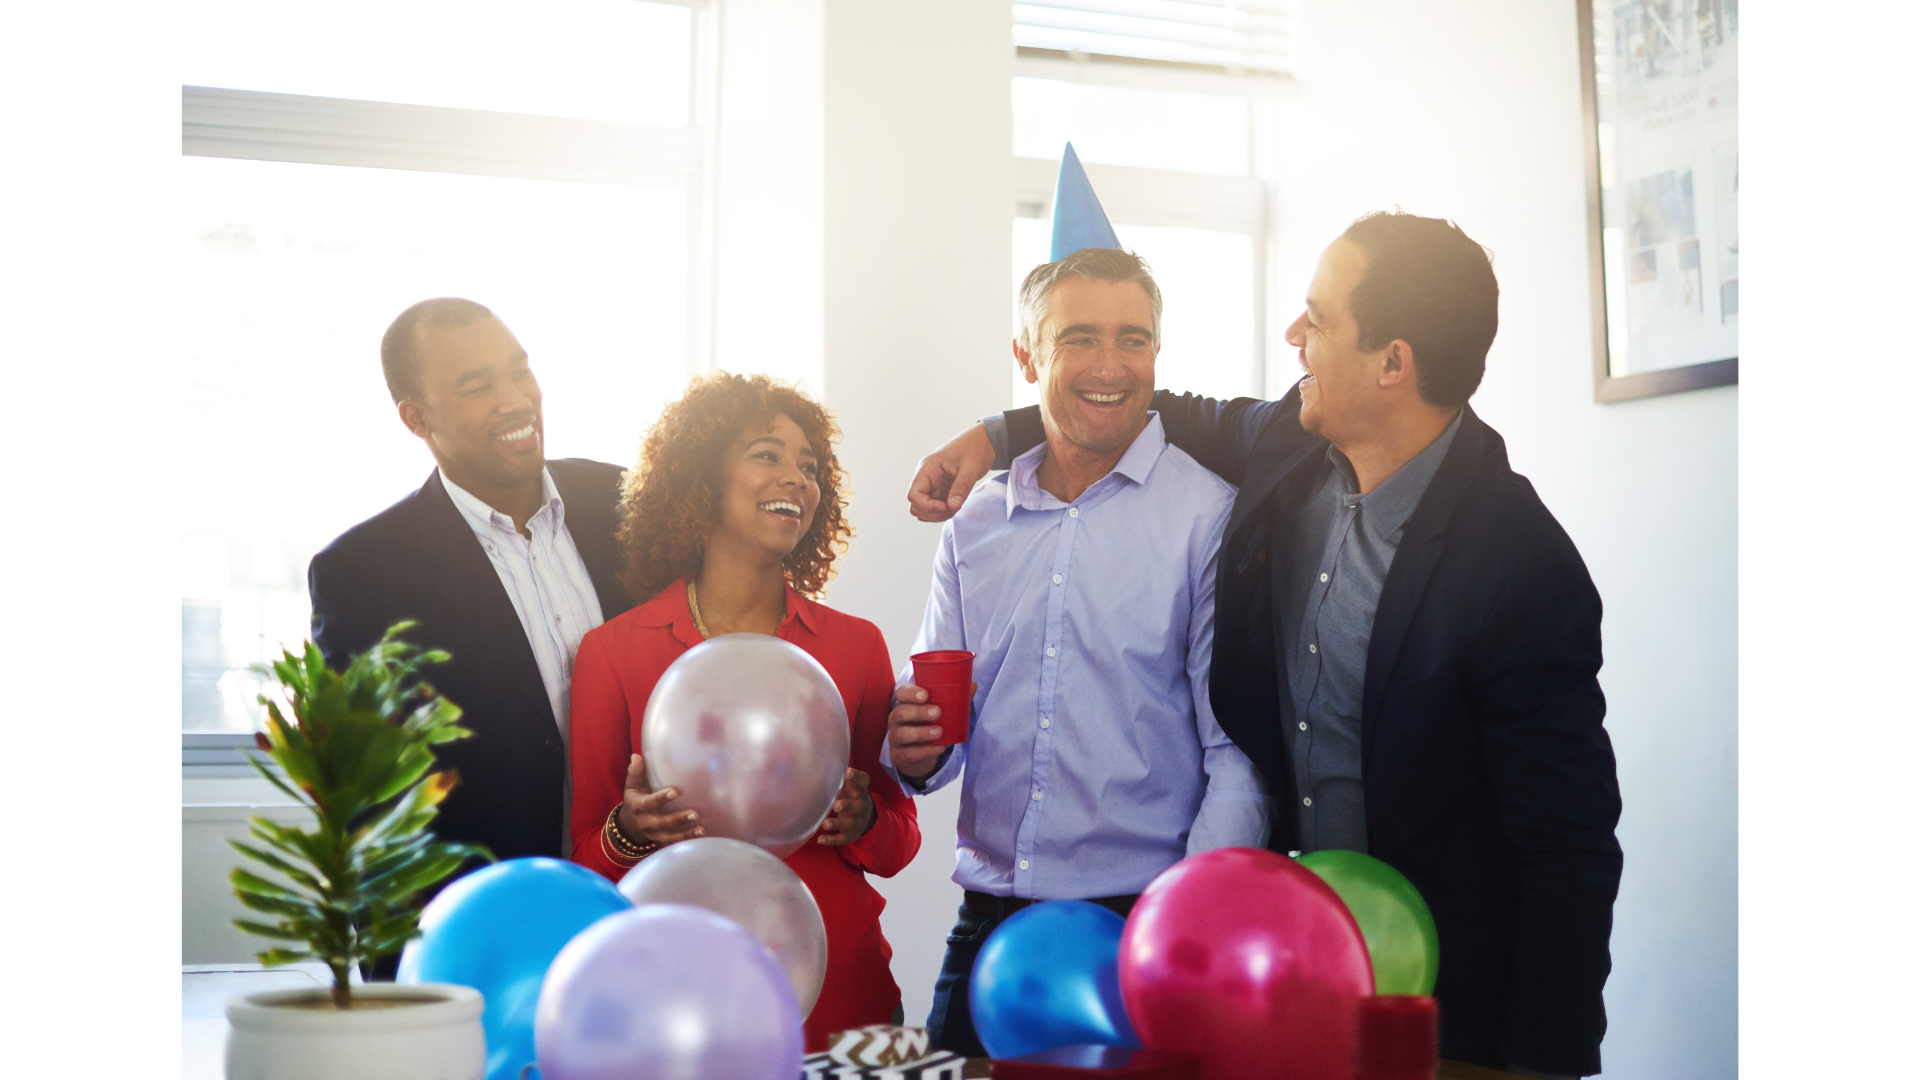 employee birthday gifts | coworker birthday gifts | office birthday ideas | employee birthday gift ideas